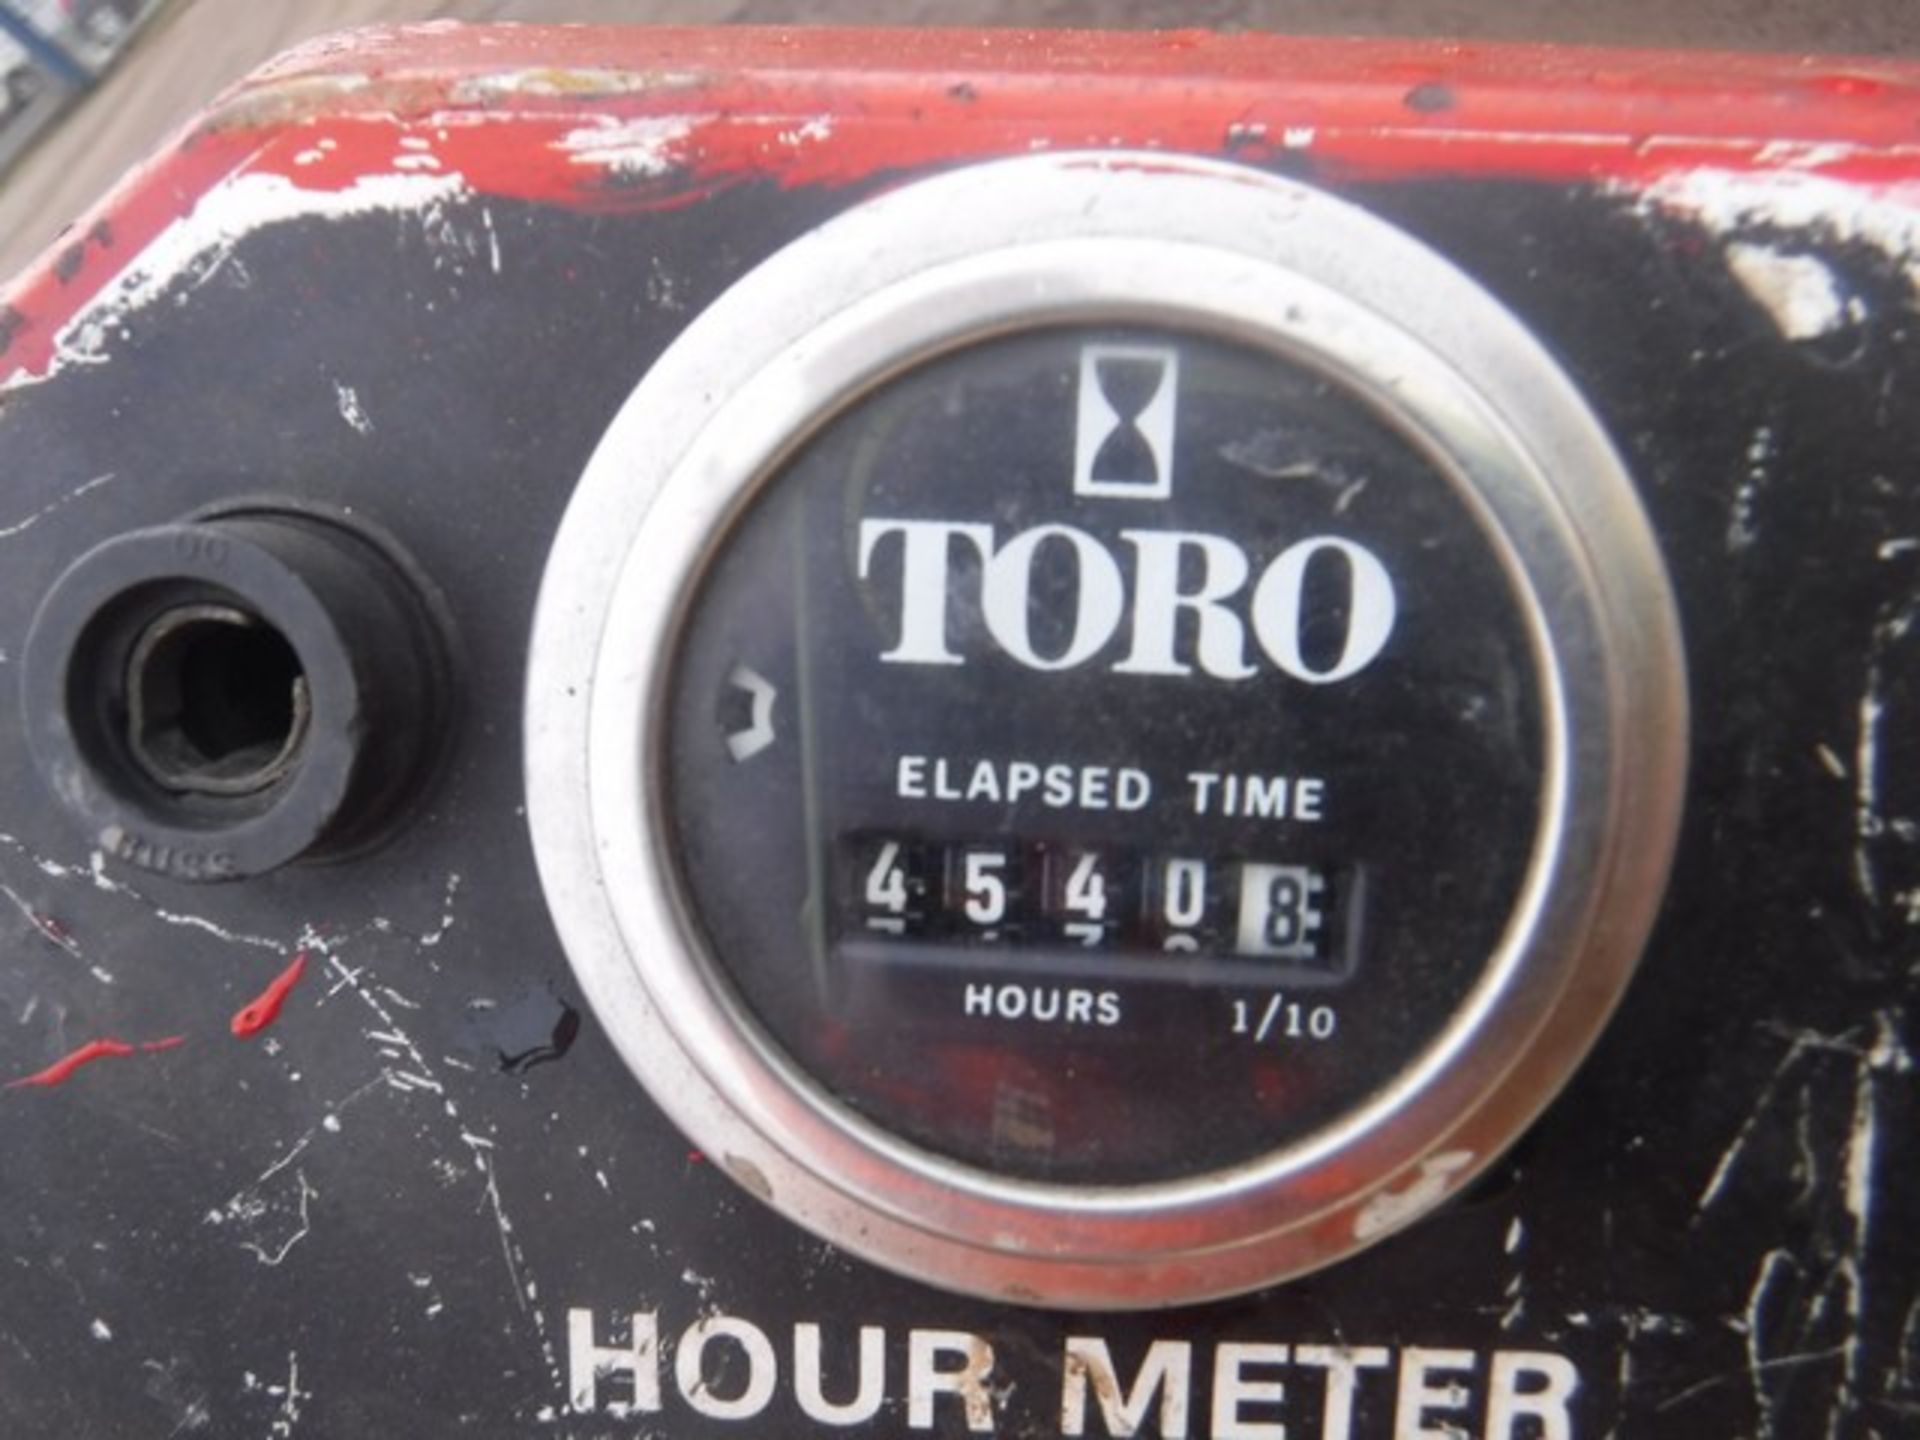 TORO triple petrol mower 4540hrs. Asset No 24FN - Image 6 of 7